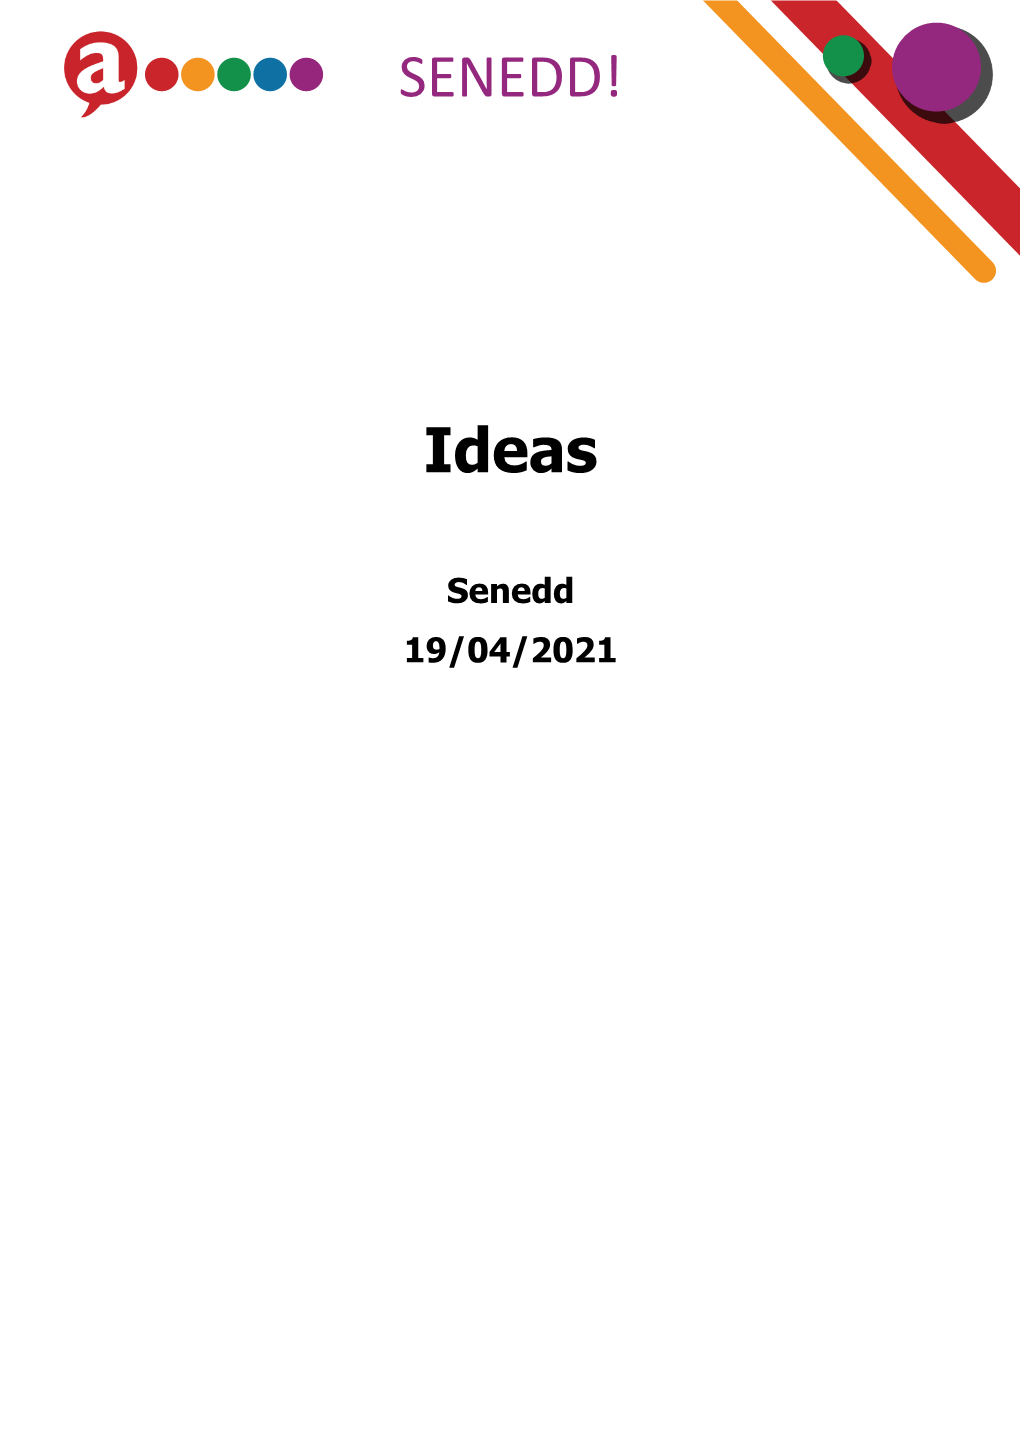 SENEDD! Ideas